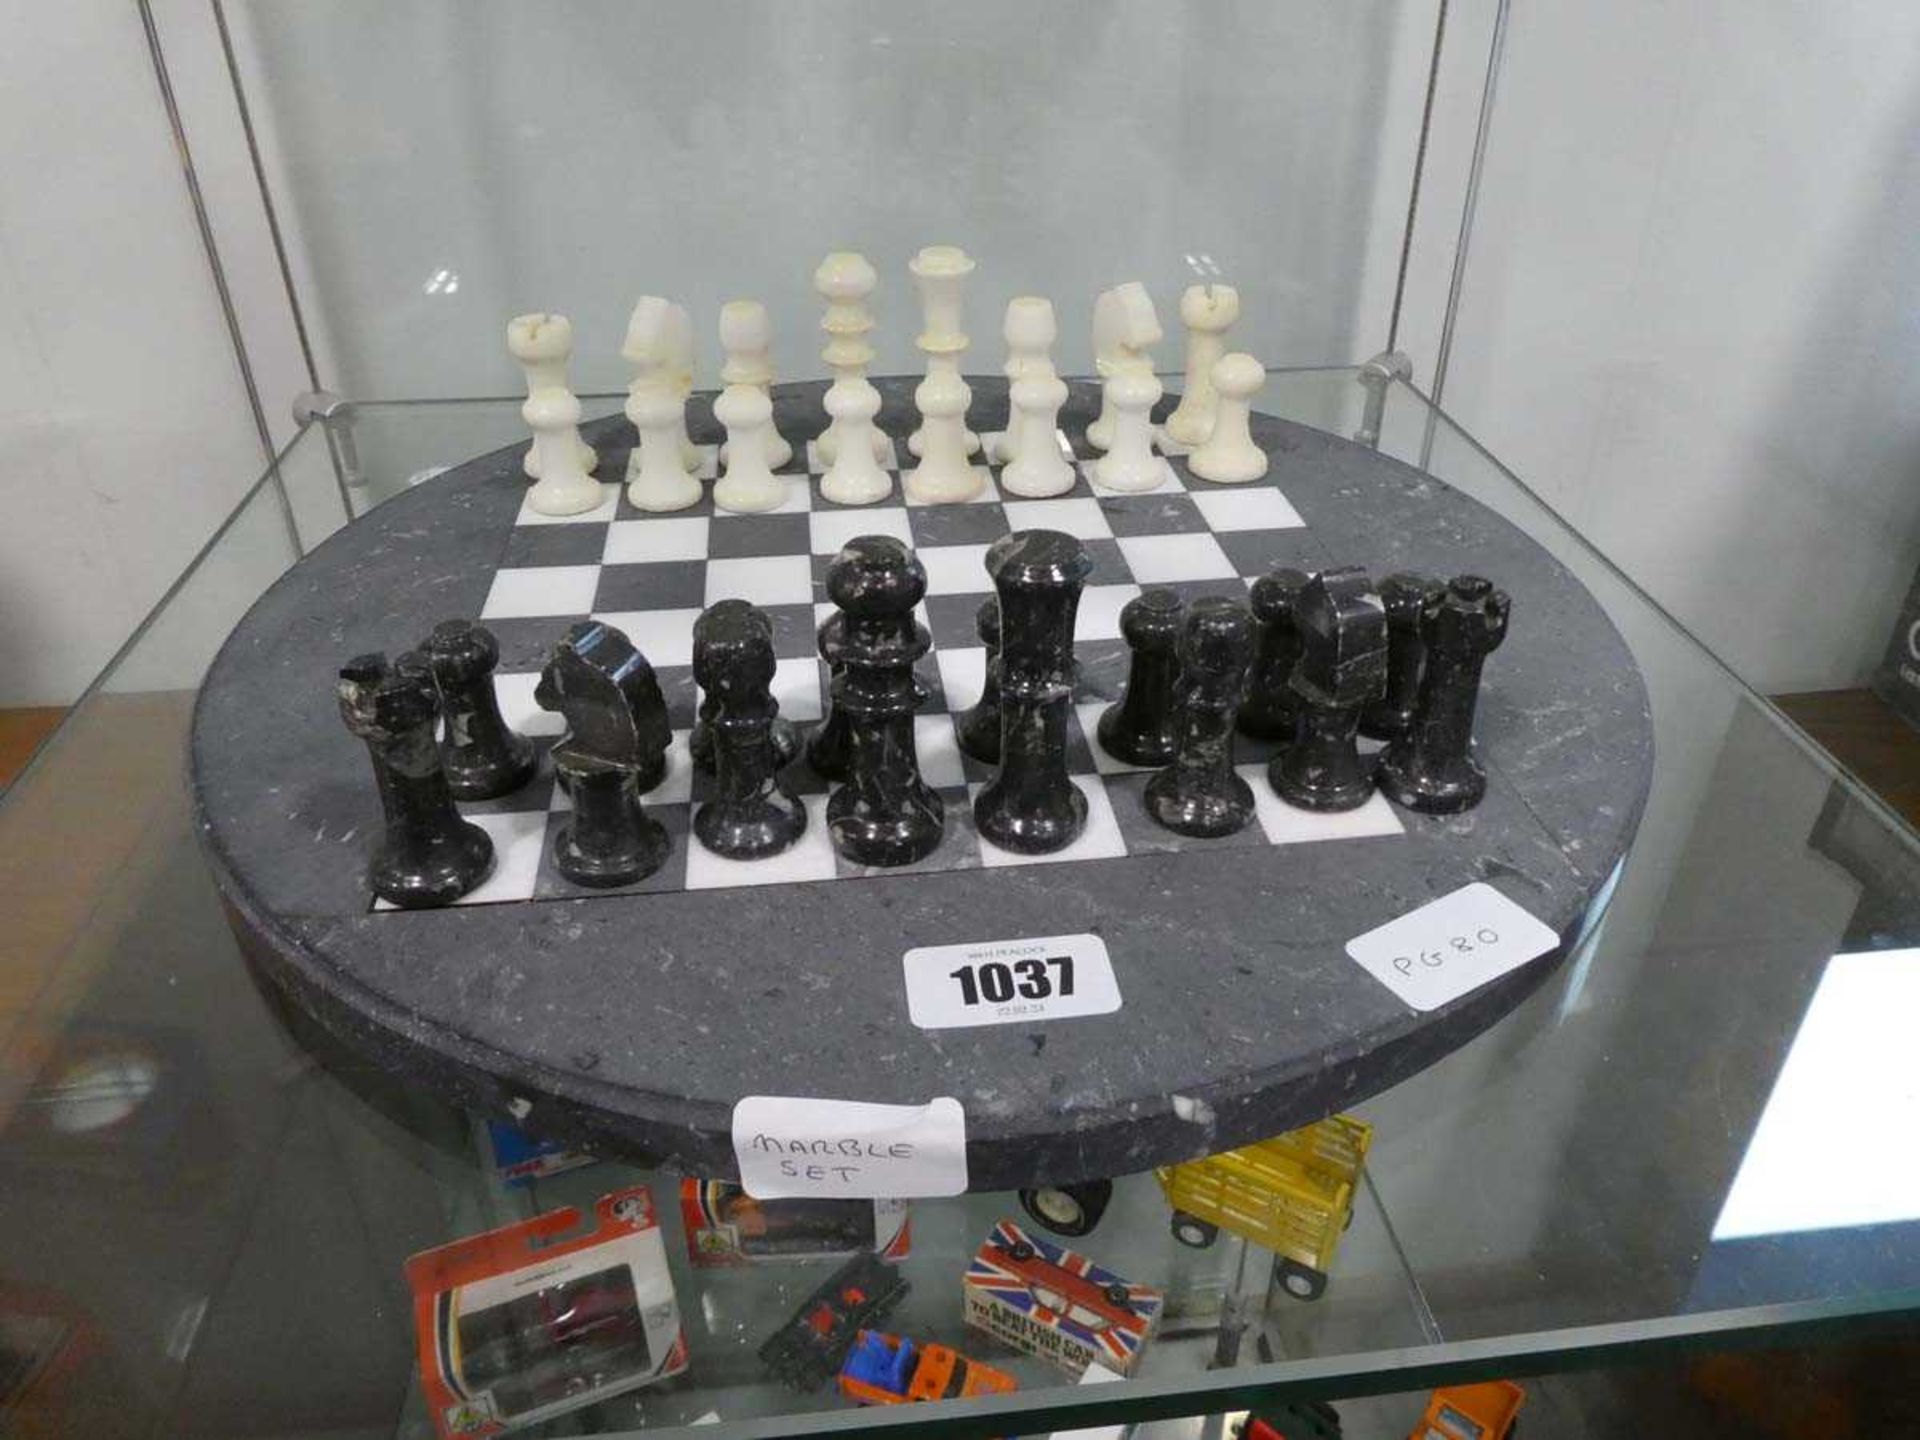 Circular marble finish chess set